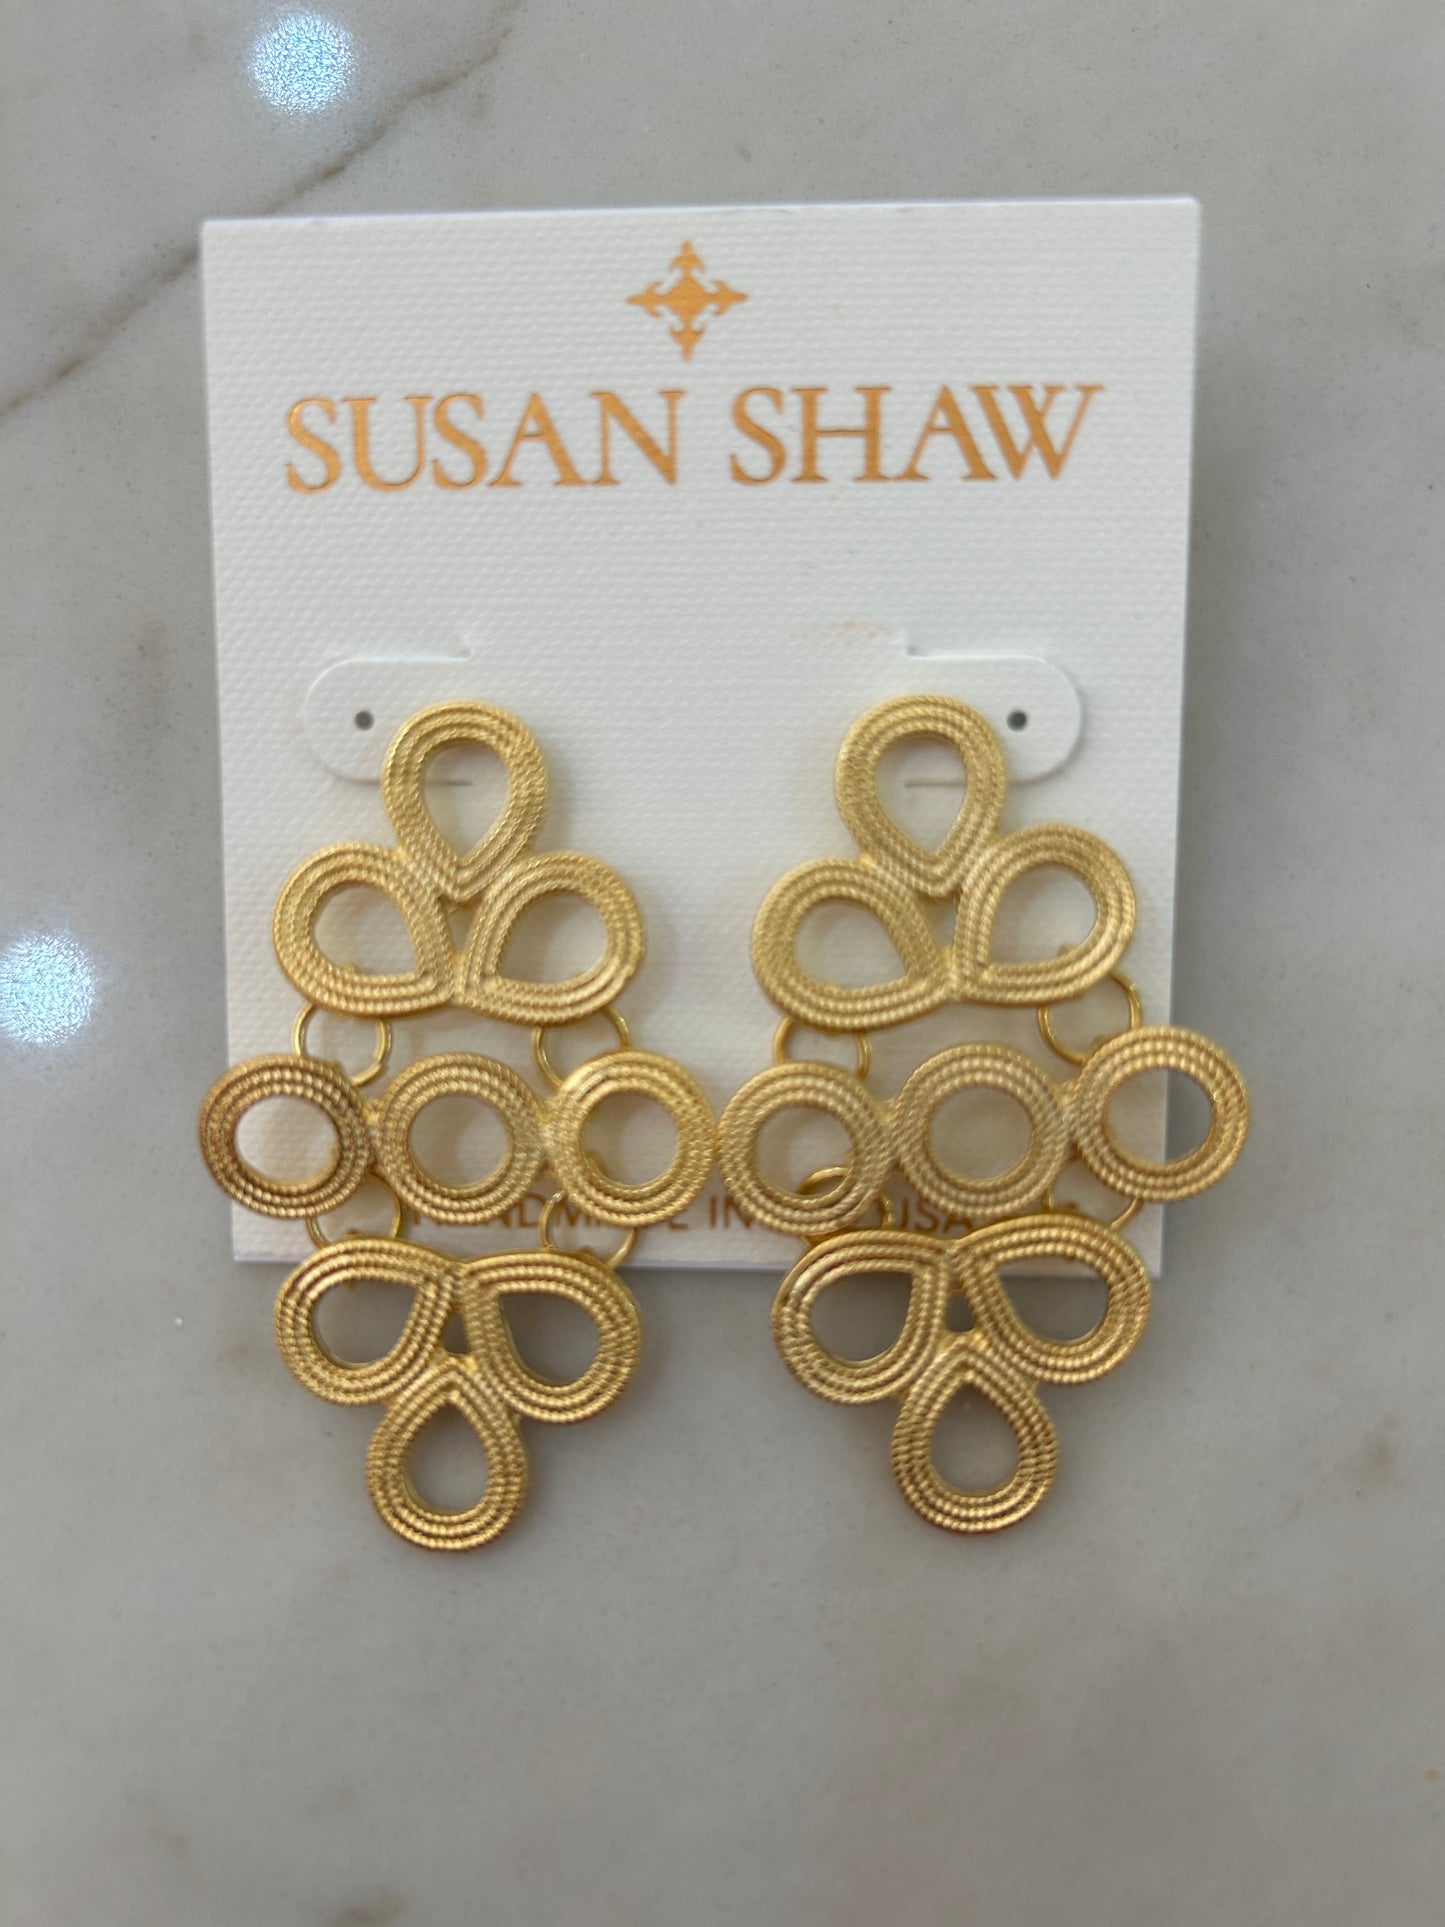 Susan Shaw Gold Multi Circle Post Earrings